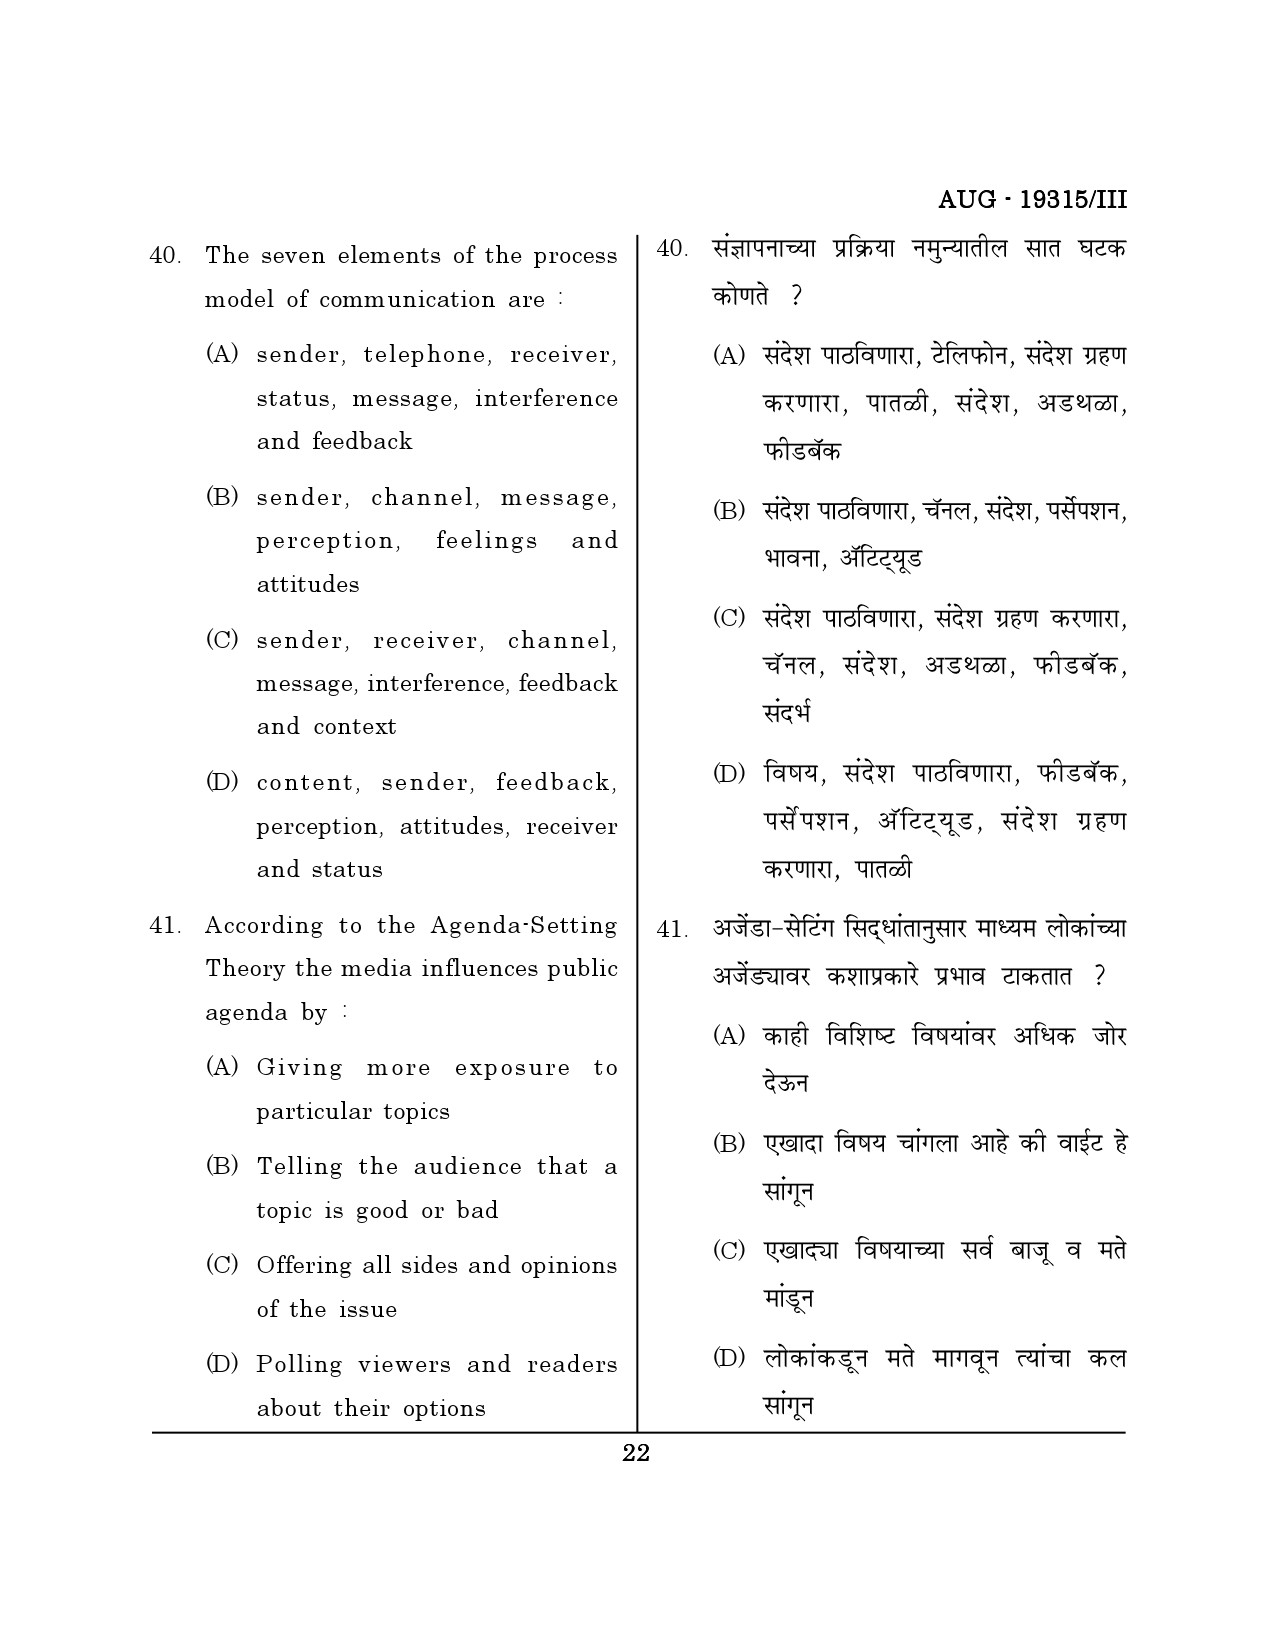 Maharashtra SET Journalism and Mass Communication Question Paper III August 2015 21